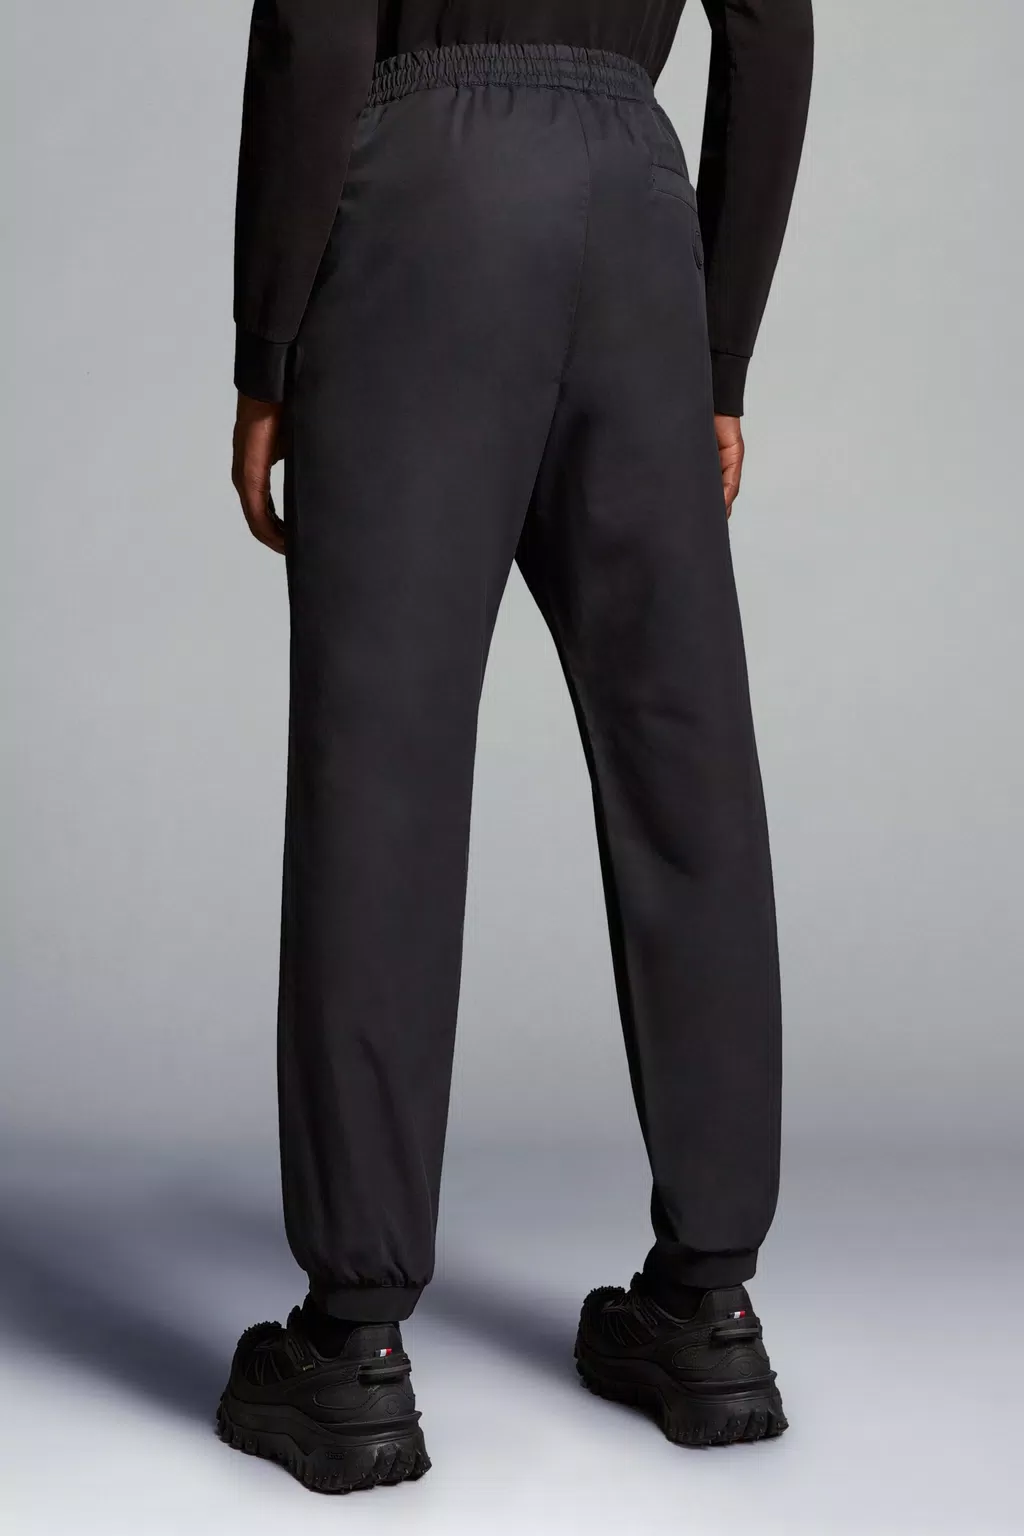 Black Cotton & Nylon Jogging Pants - Pants & Shorts for Men | Moncler US